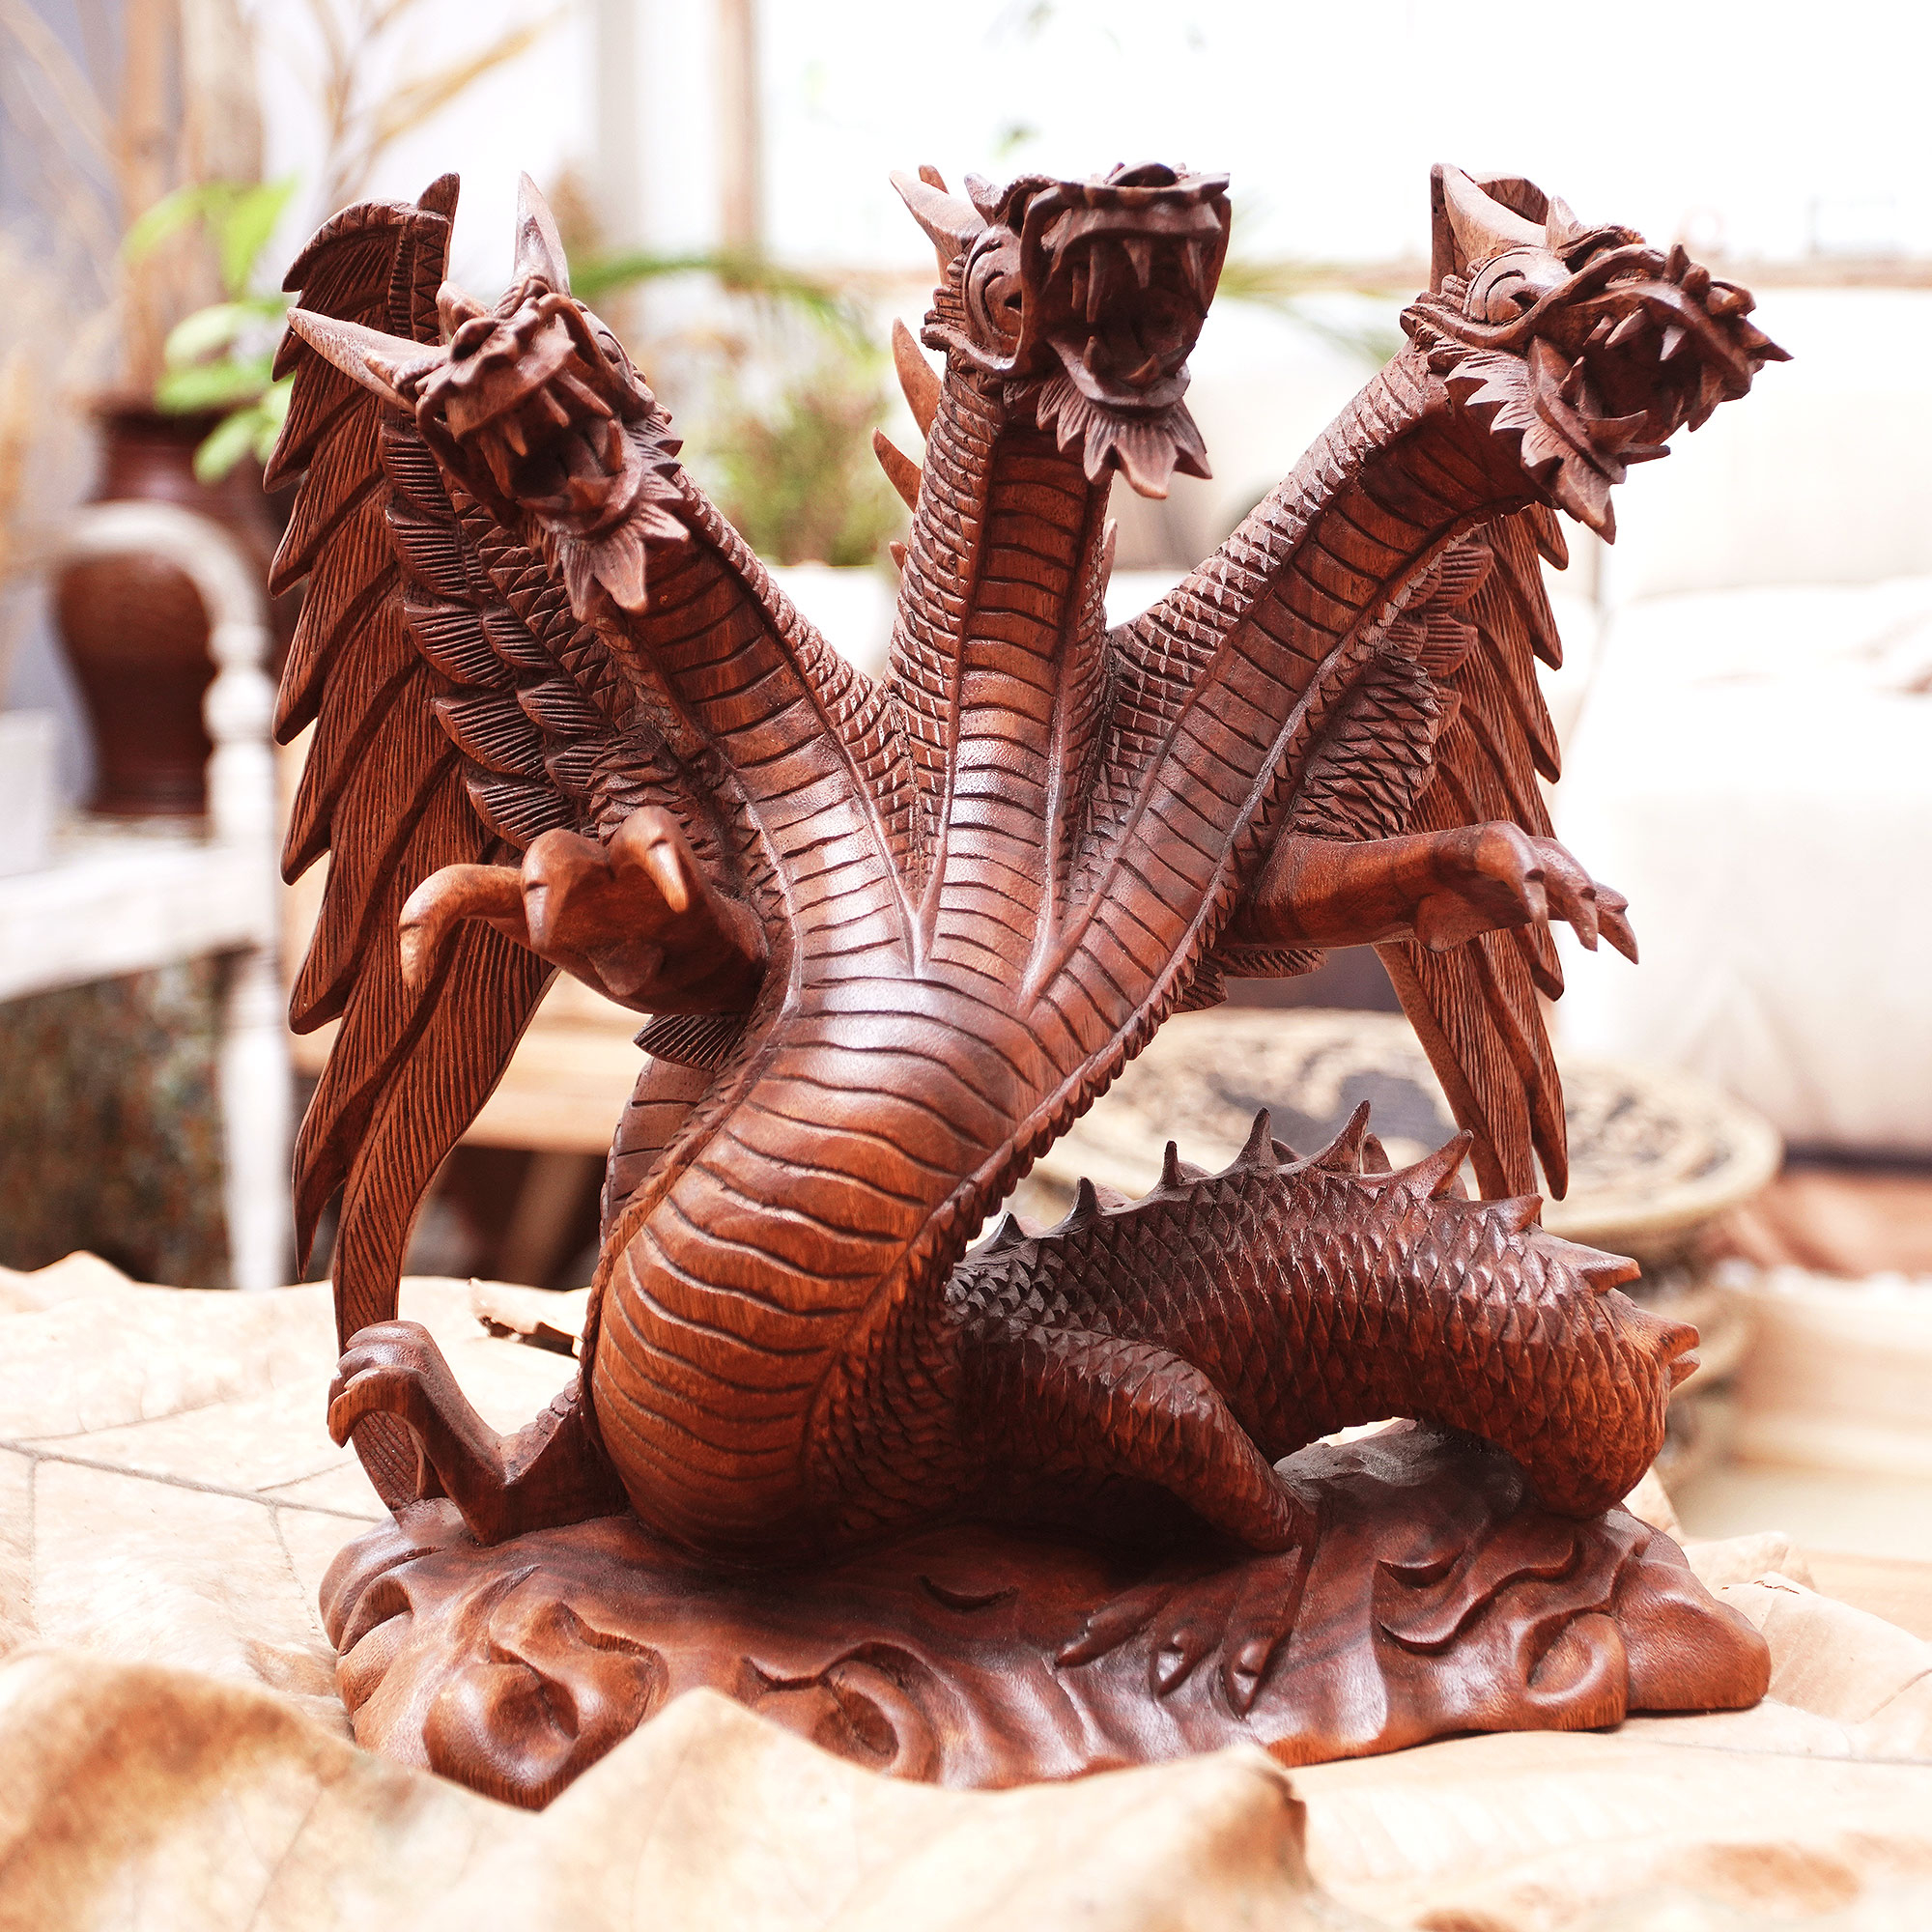 Unique Wood Dragon Sculpture - Guardian of the Home